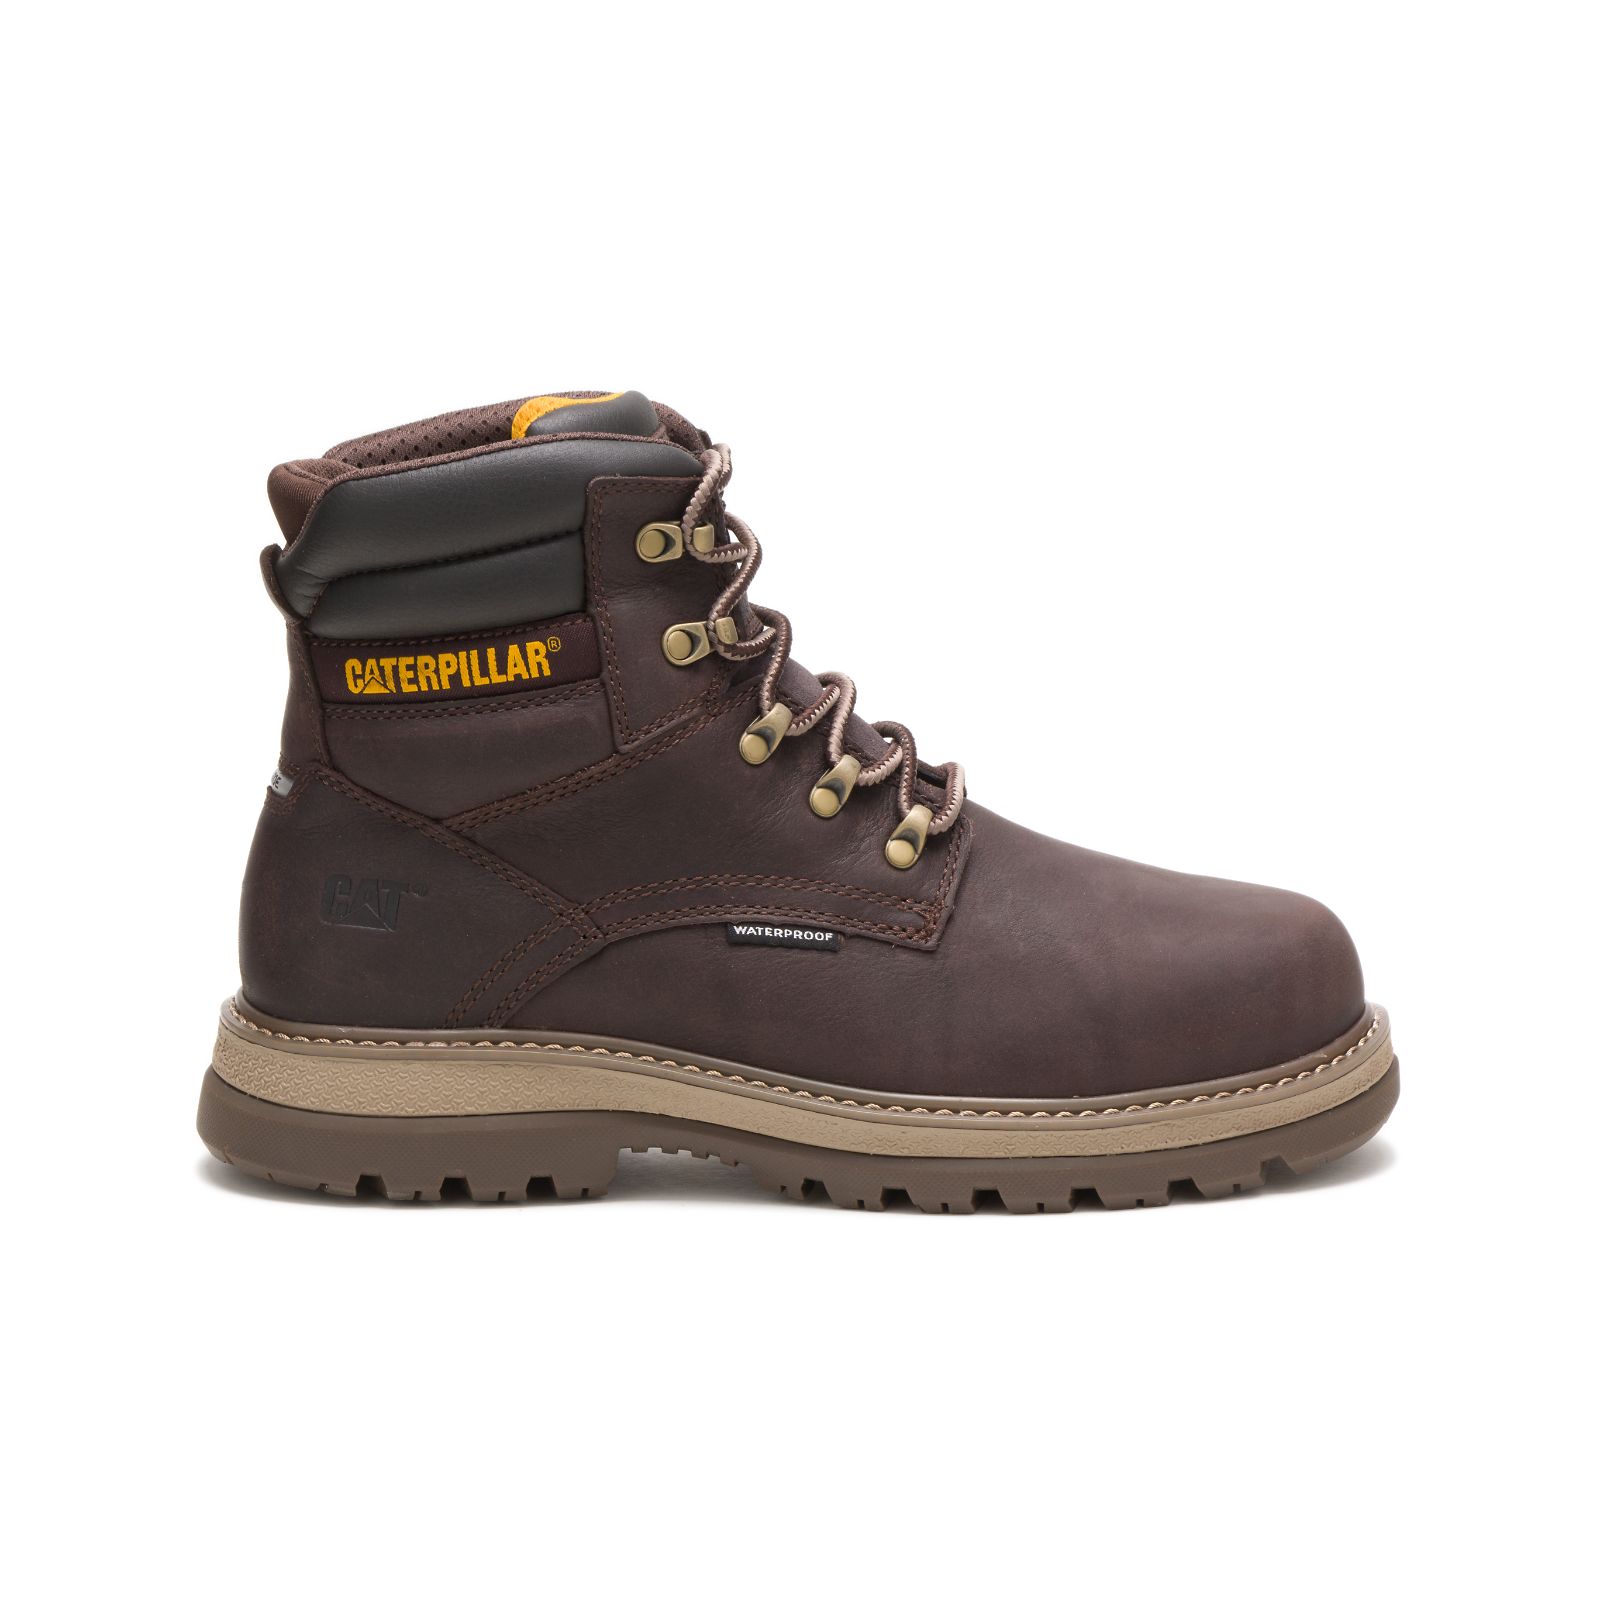 Caterpillar Fairbanks 6" Waterproof Steel Toe Philippines - Mens Steel Toe Boots - Deep Brown 34920ADUI